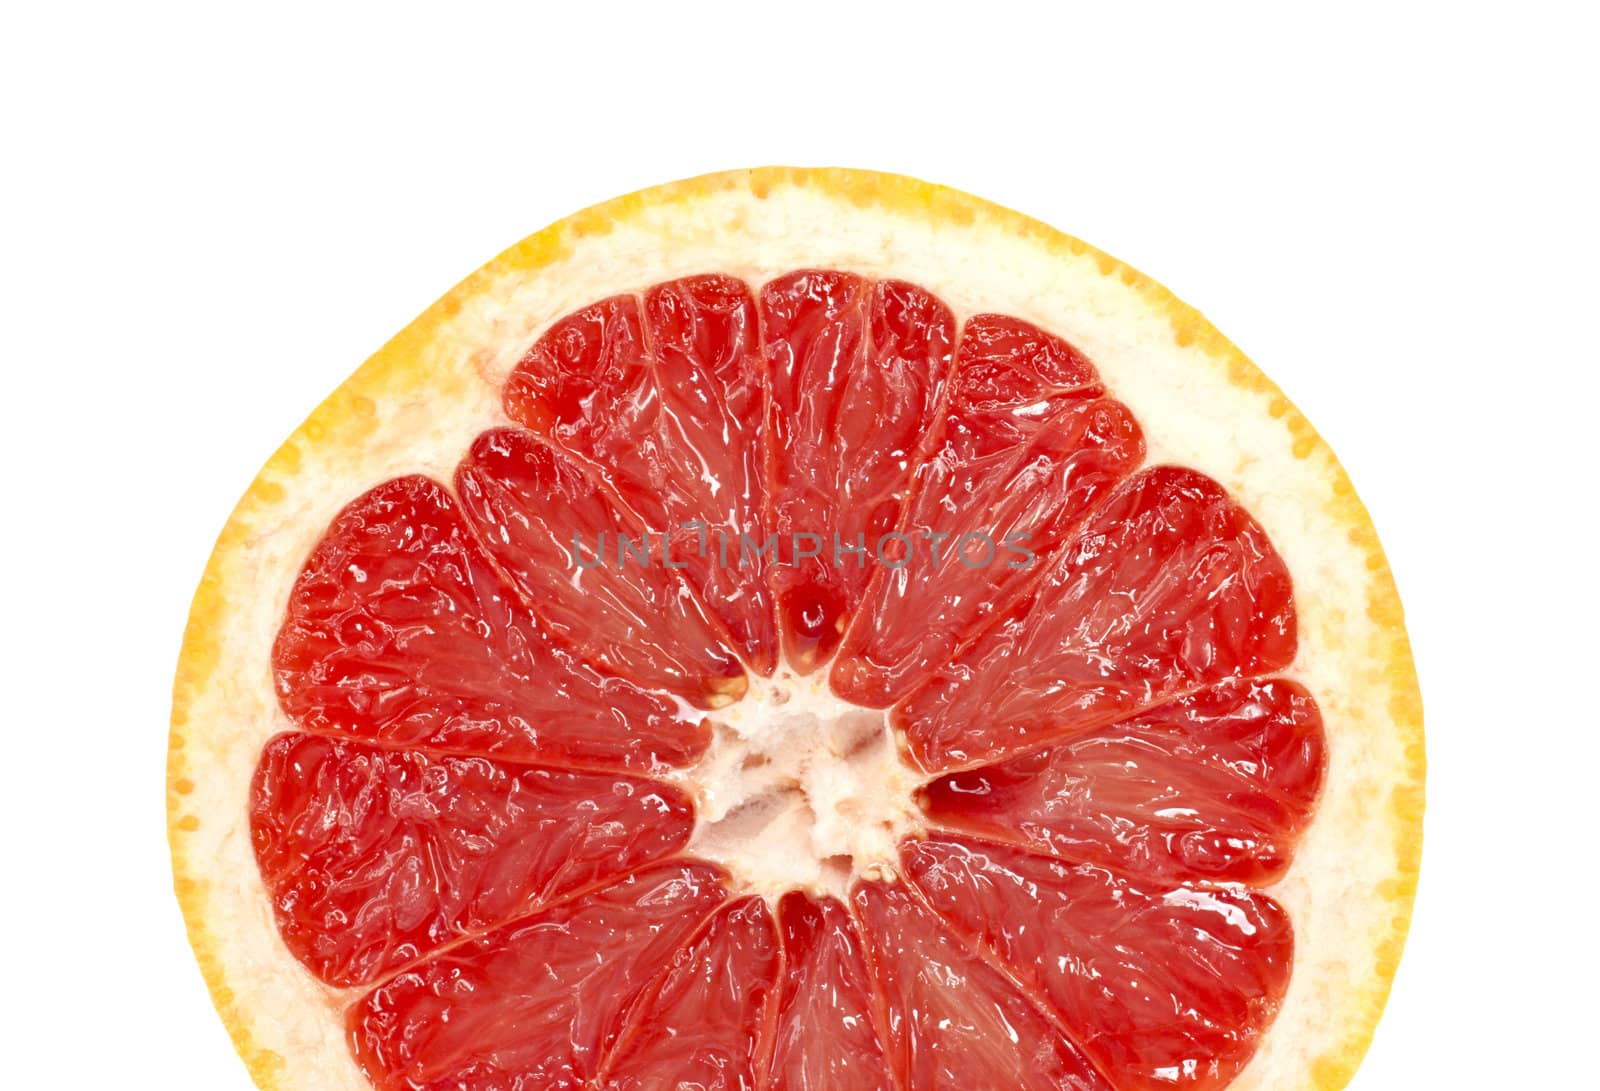 Red grapefruit close-up macro shot  by schankz